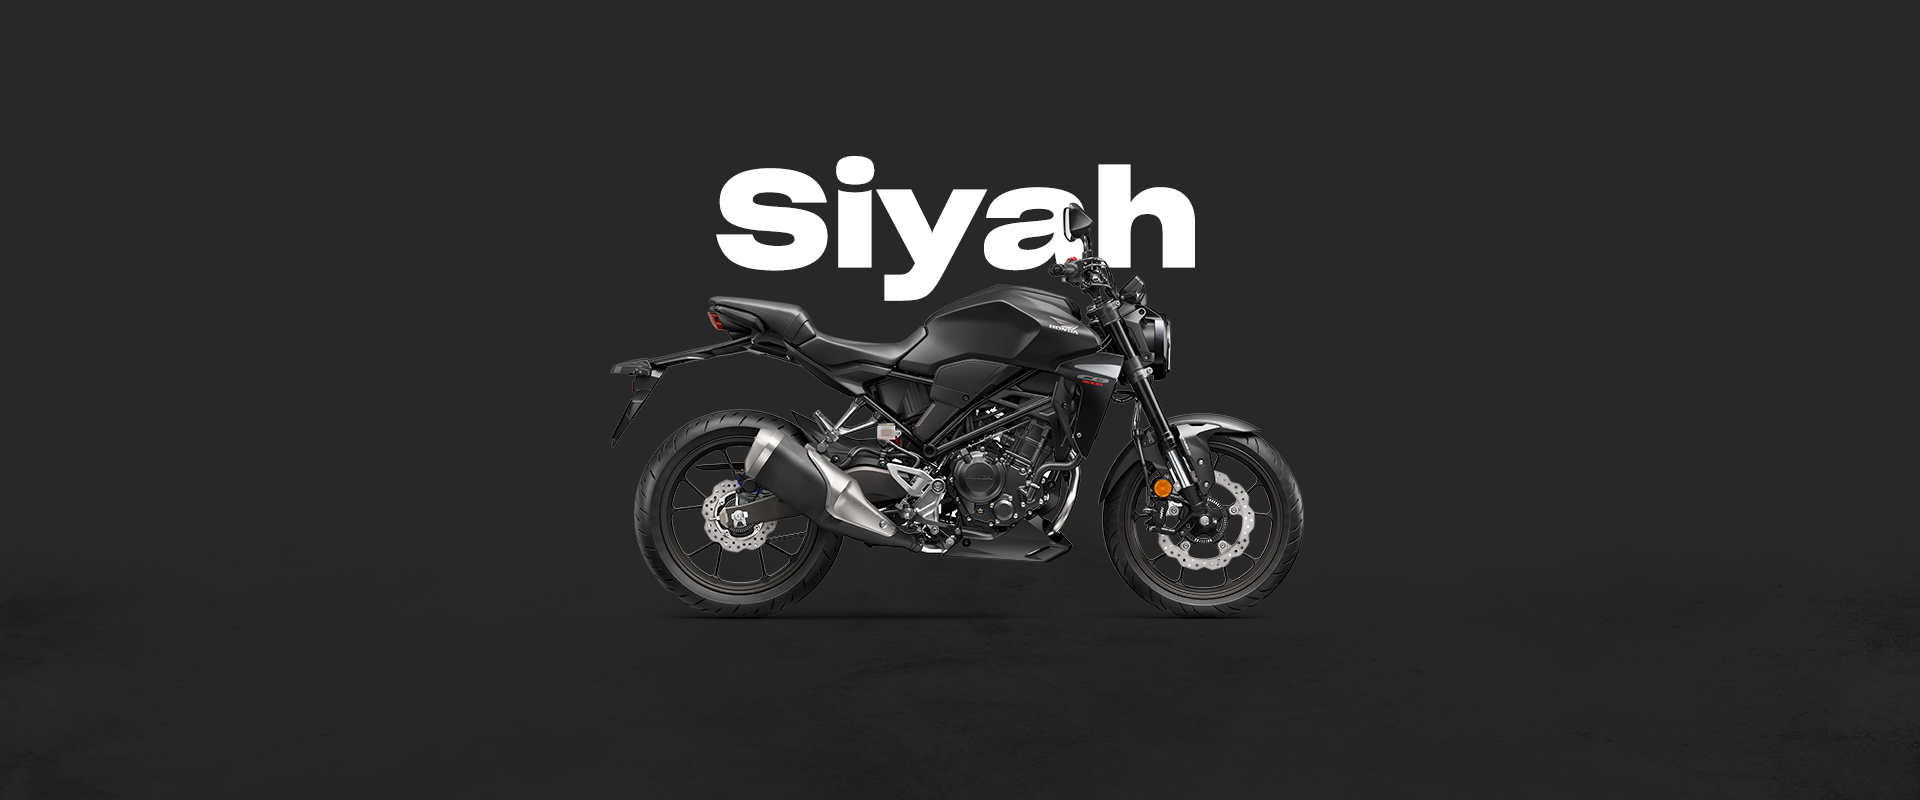  Honda Aysan Siyah <br /> Mat Gunpowder Black Metallic <br /> (NH 436M)